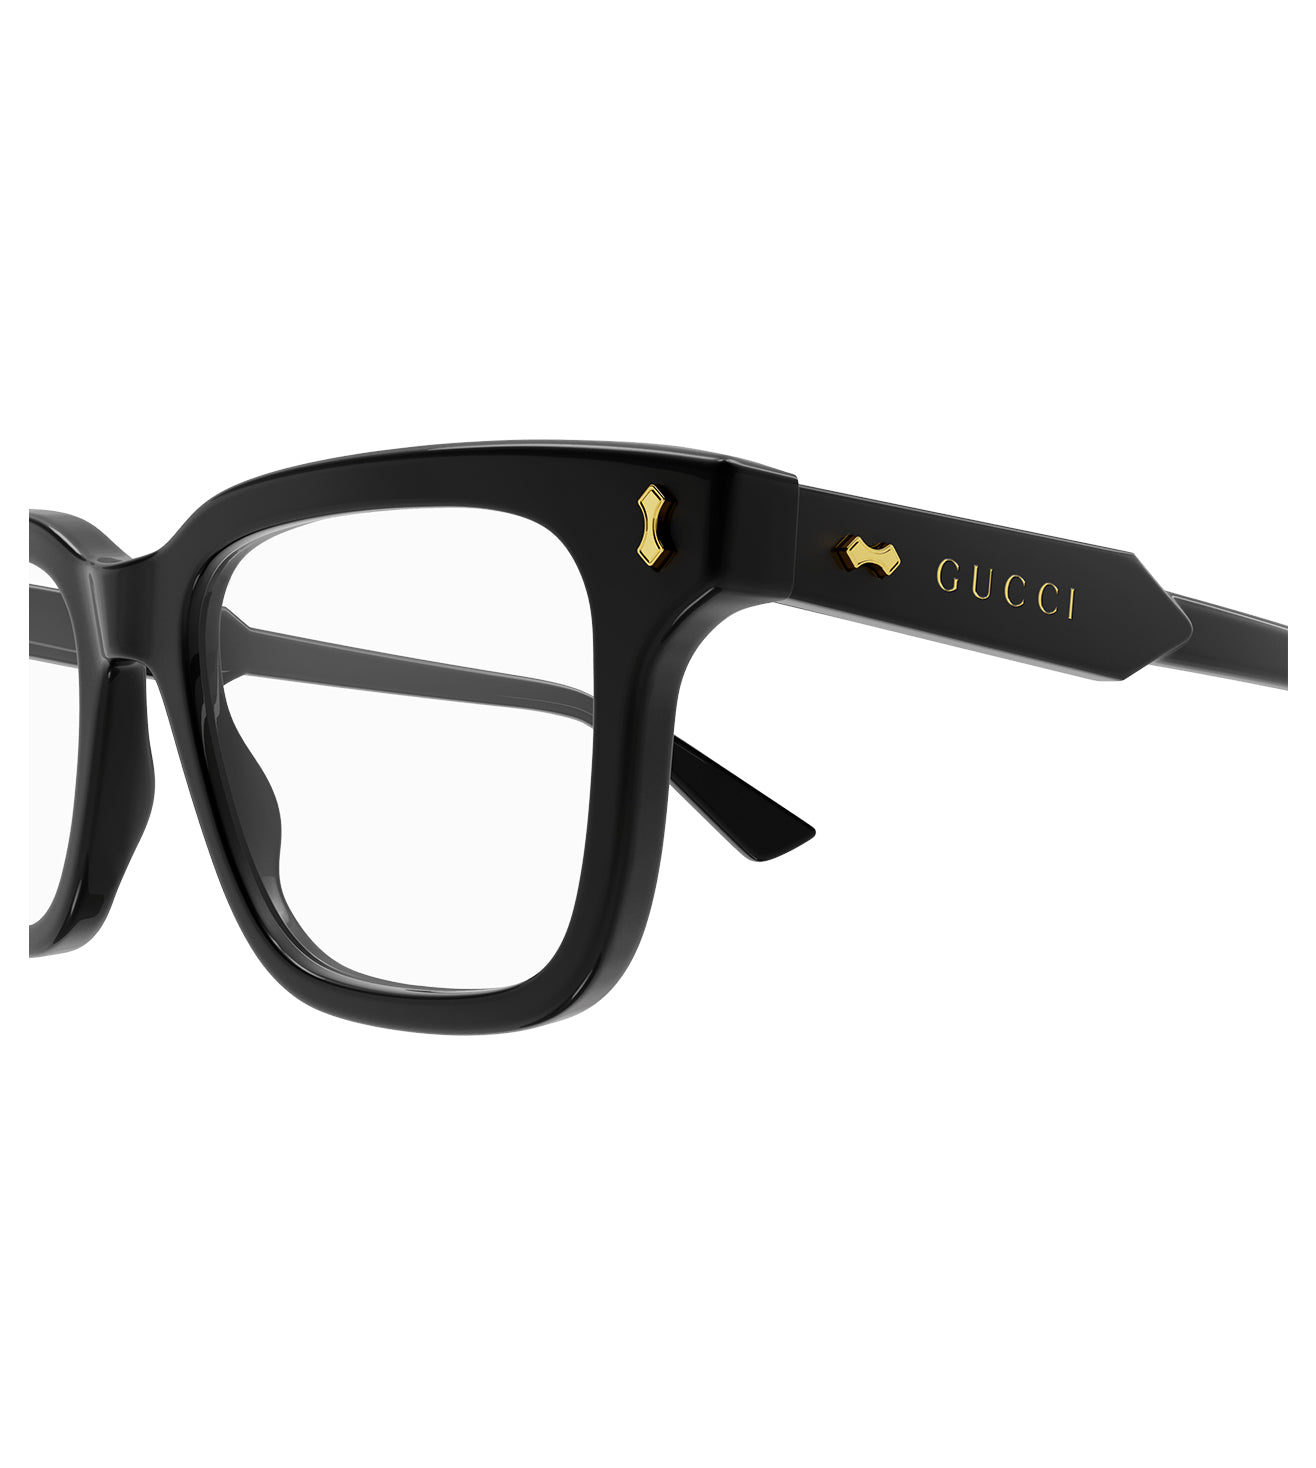 Gucci Men's Black Rectangular Optical Frame